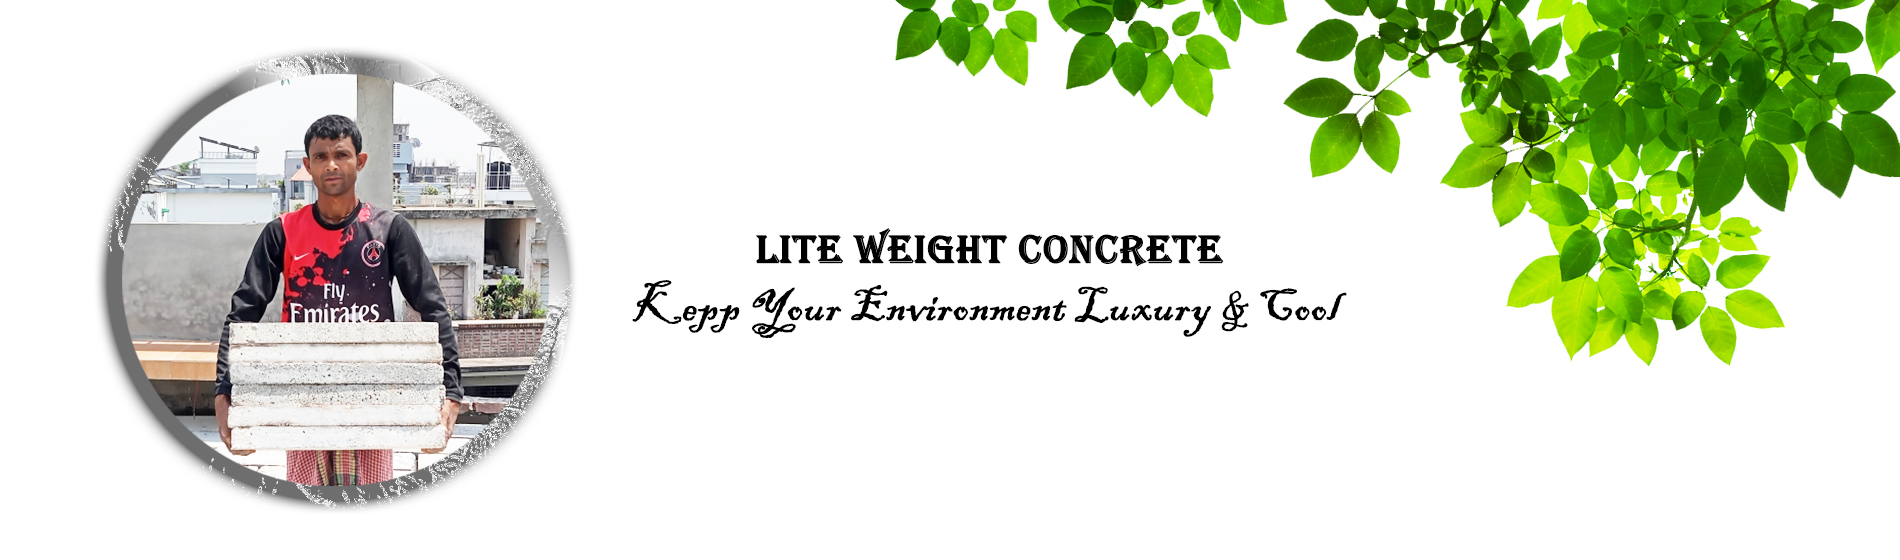 Lite-Weight-Concrete-COver-Photo.jpgok